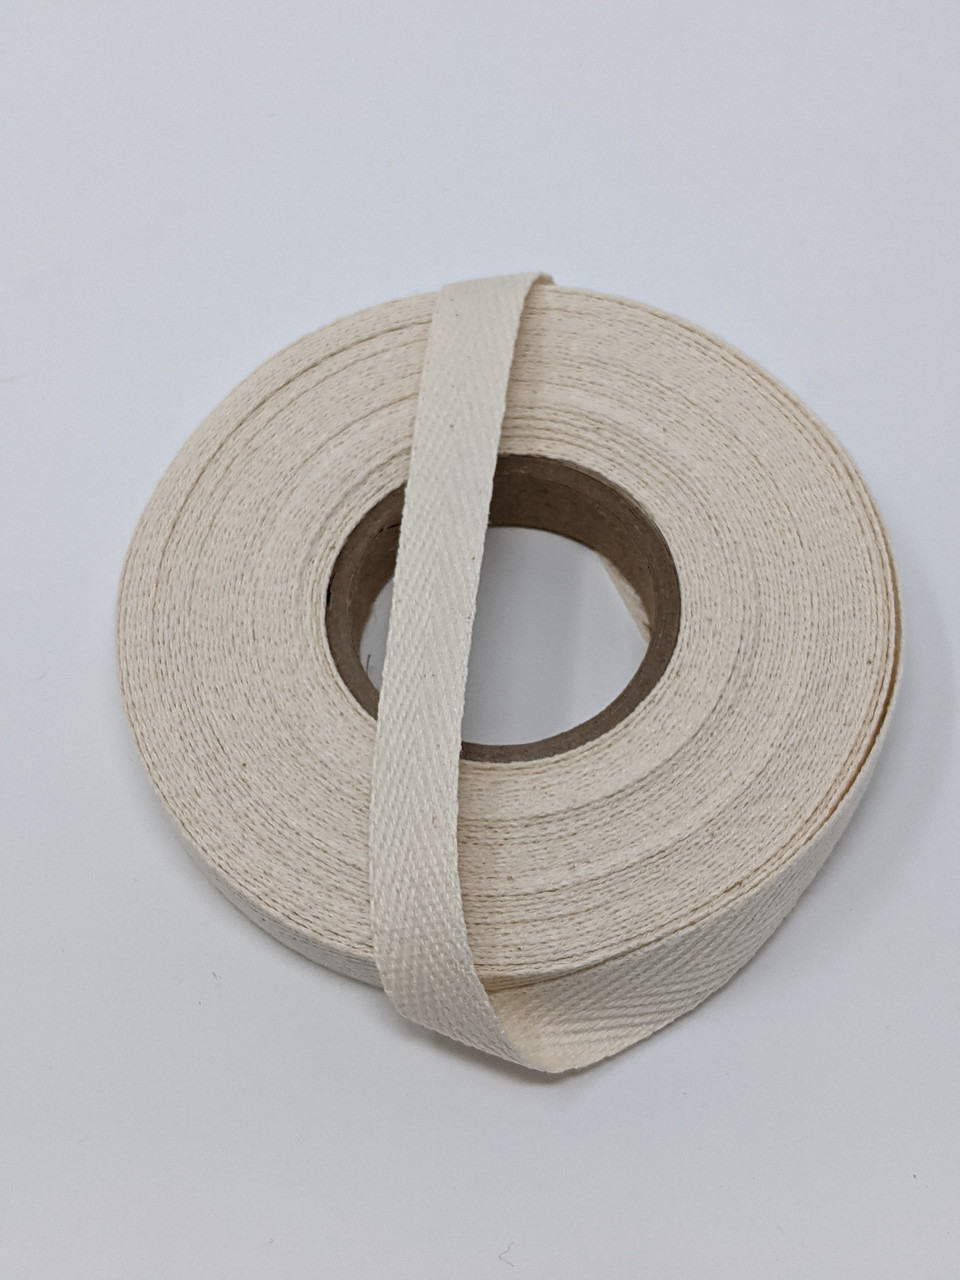 Cotton Twill Tape - multipurpose tape - Bra-Makers Supply